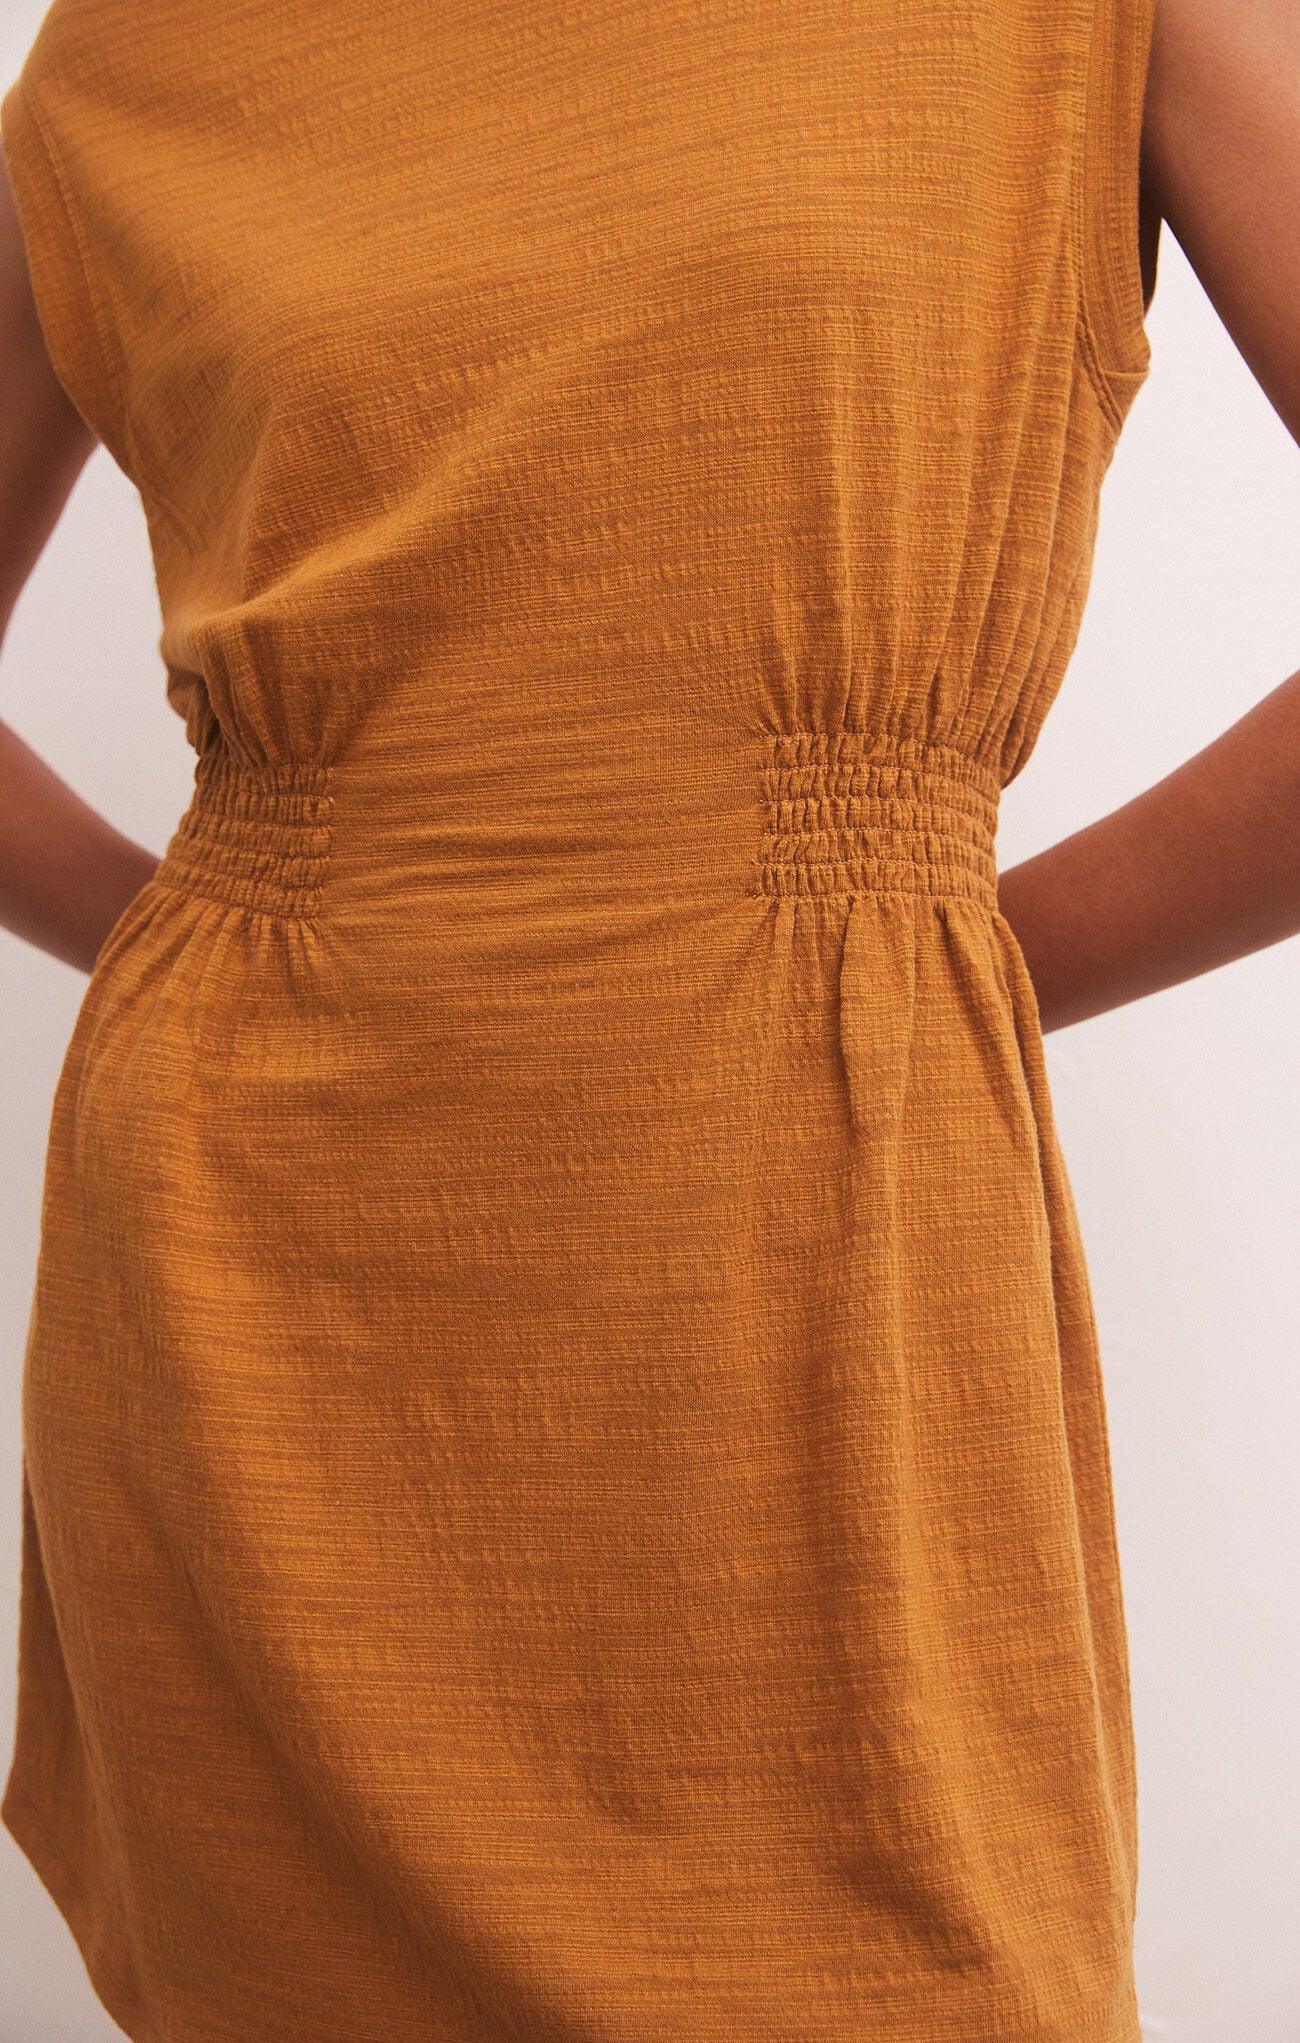 Rowan Textured Knit Dress - The Salty Mare